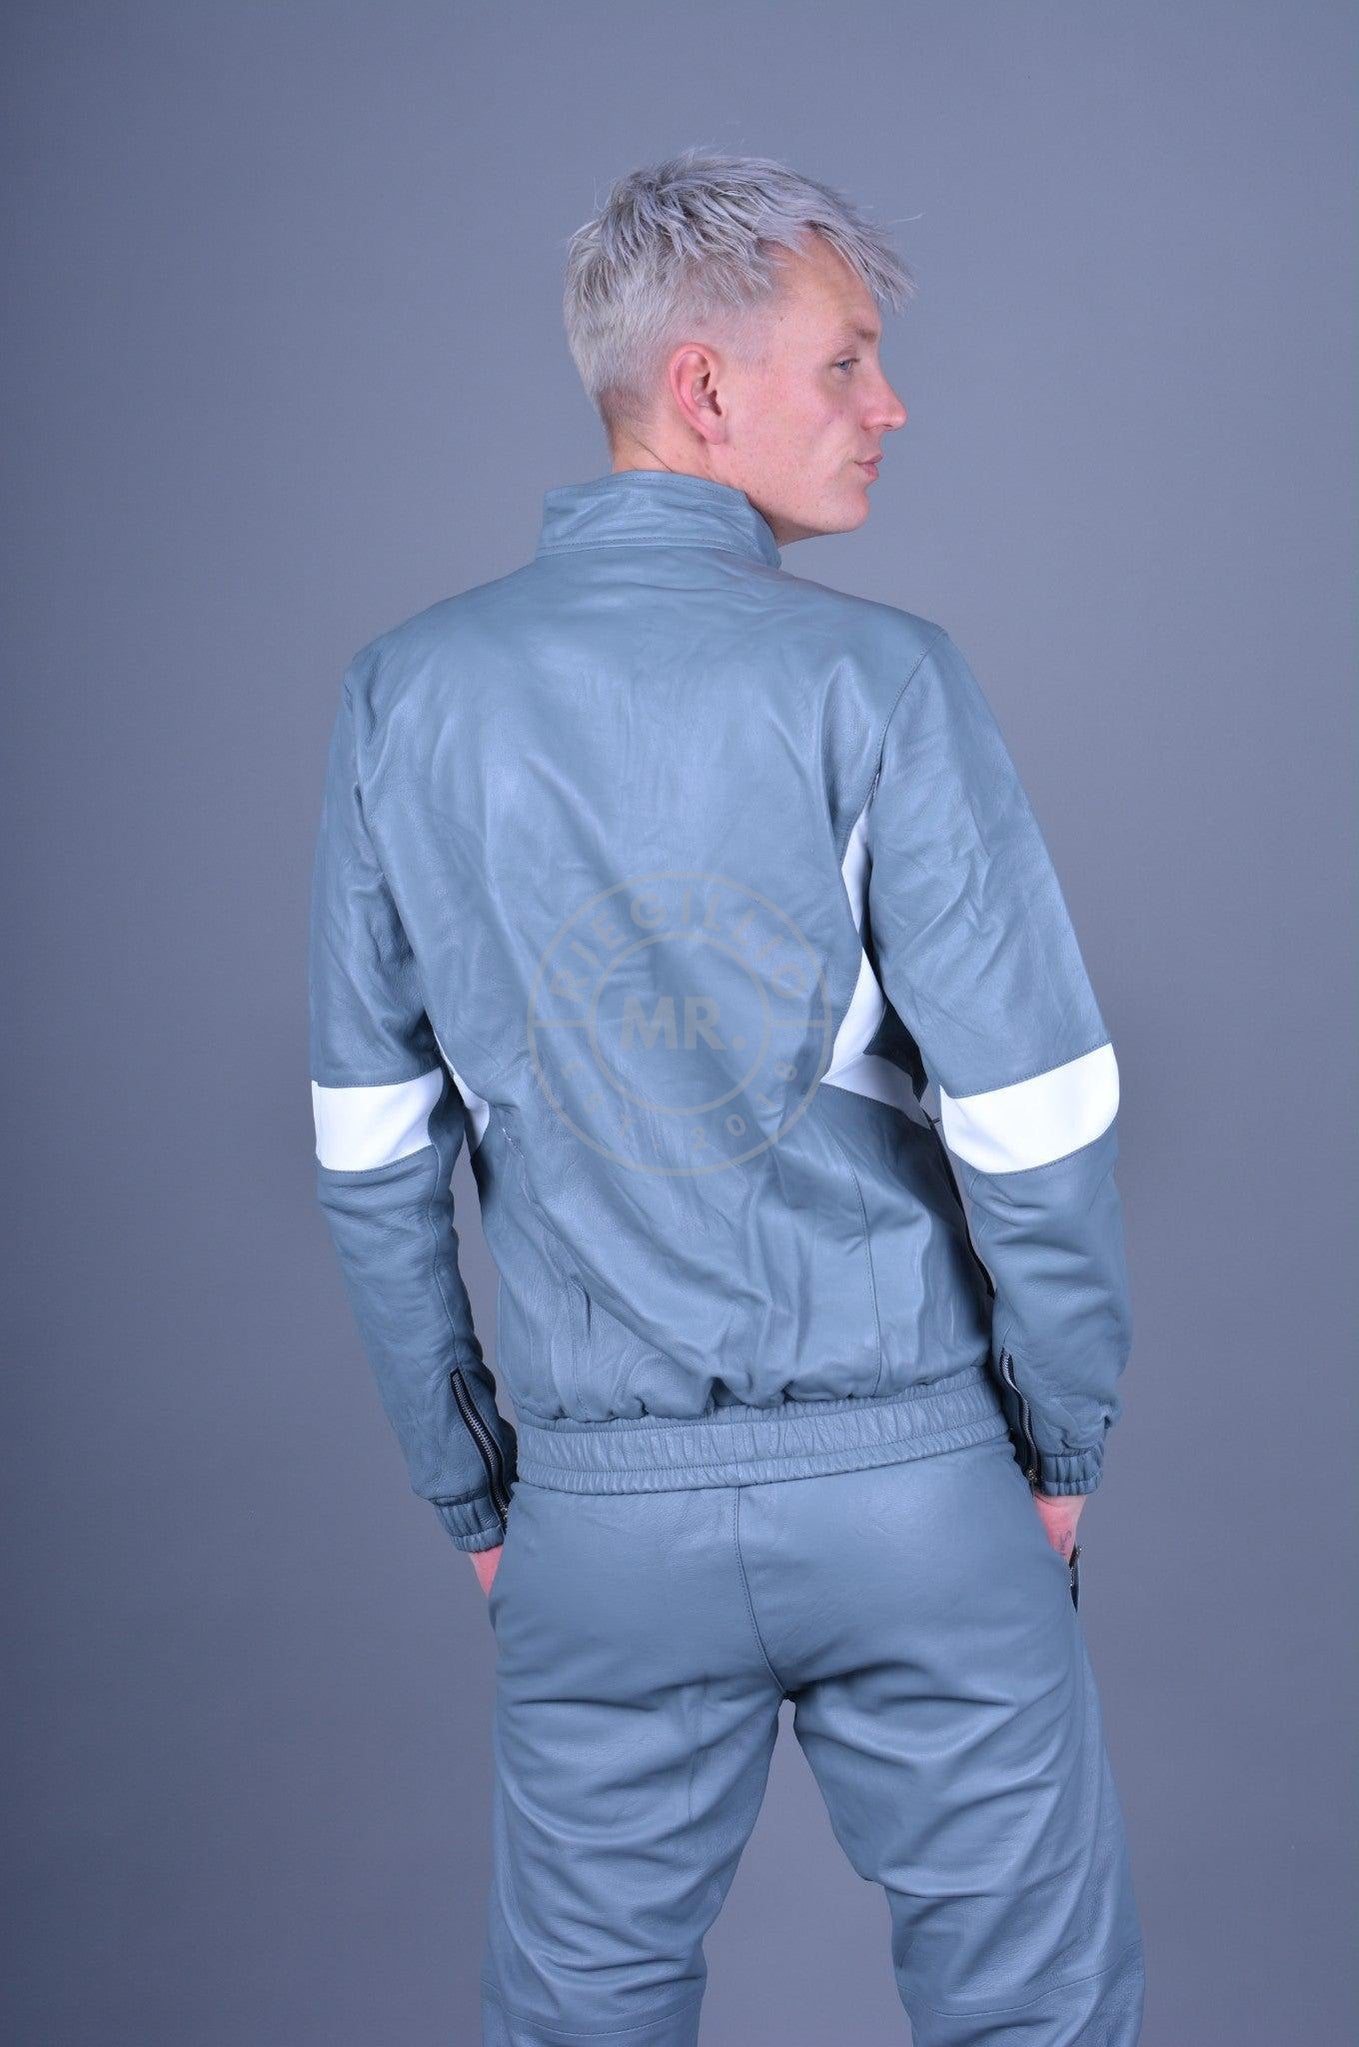 Slate Grey Leather Tracksuit Jacket *DISCONTINUED ITEM*-at MR. Riegillio